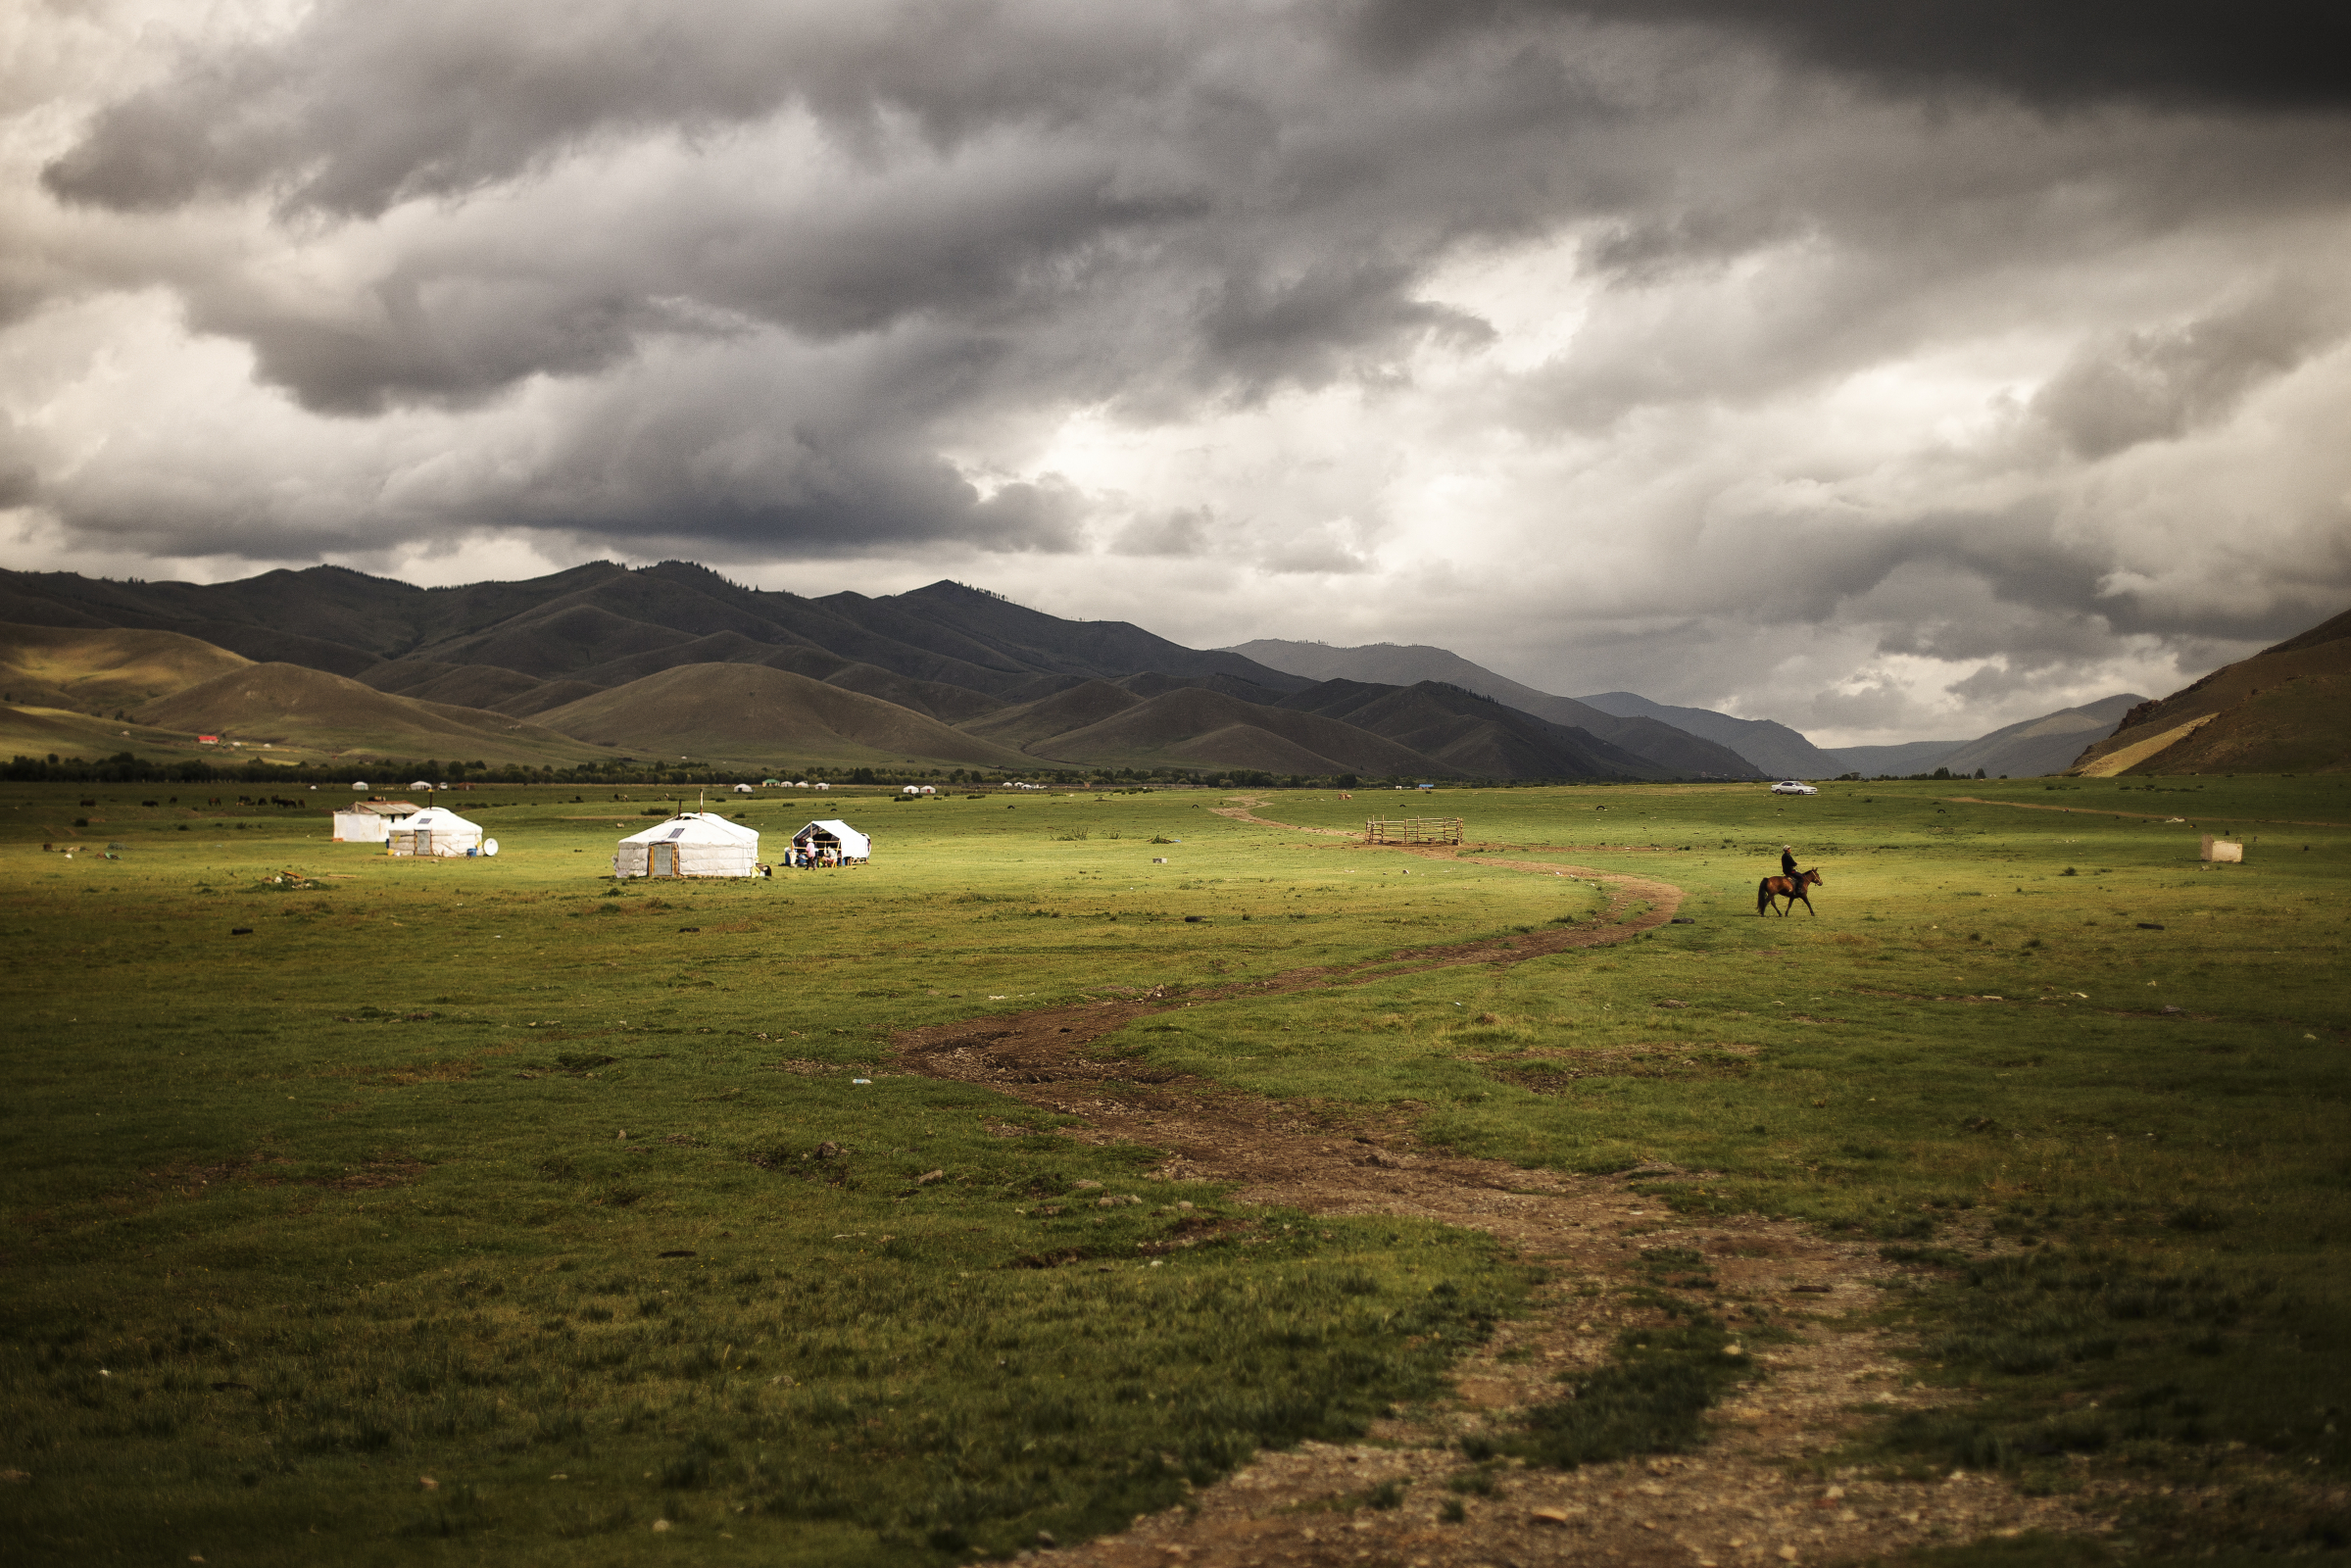 yurts-mongolia-1154419-wallpaper.jpg?dow